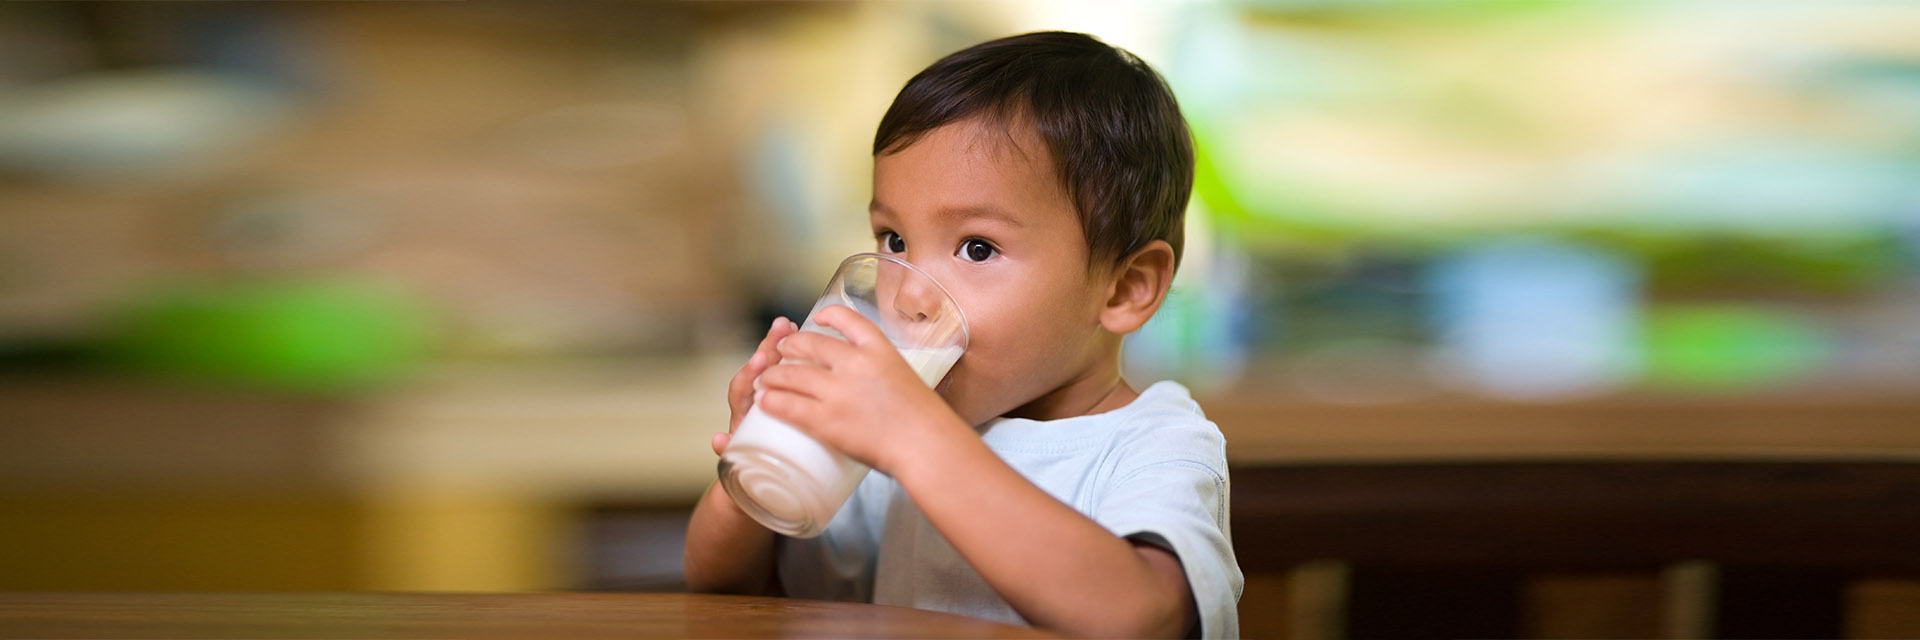 https://www.texashealth.org/baby-care/-/media/Project/THR/Sub-Sites/THR-Baby-Care/Header-Images/Header-toddler-boy-drinking-milk.jpg?h=640&iar=0&w=1920&hash=4B6E7E8365908F4F8084D7F69BB1A144